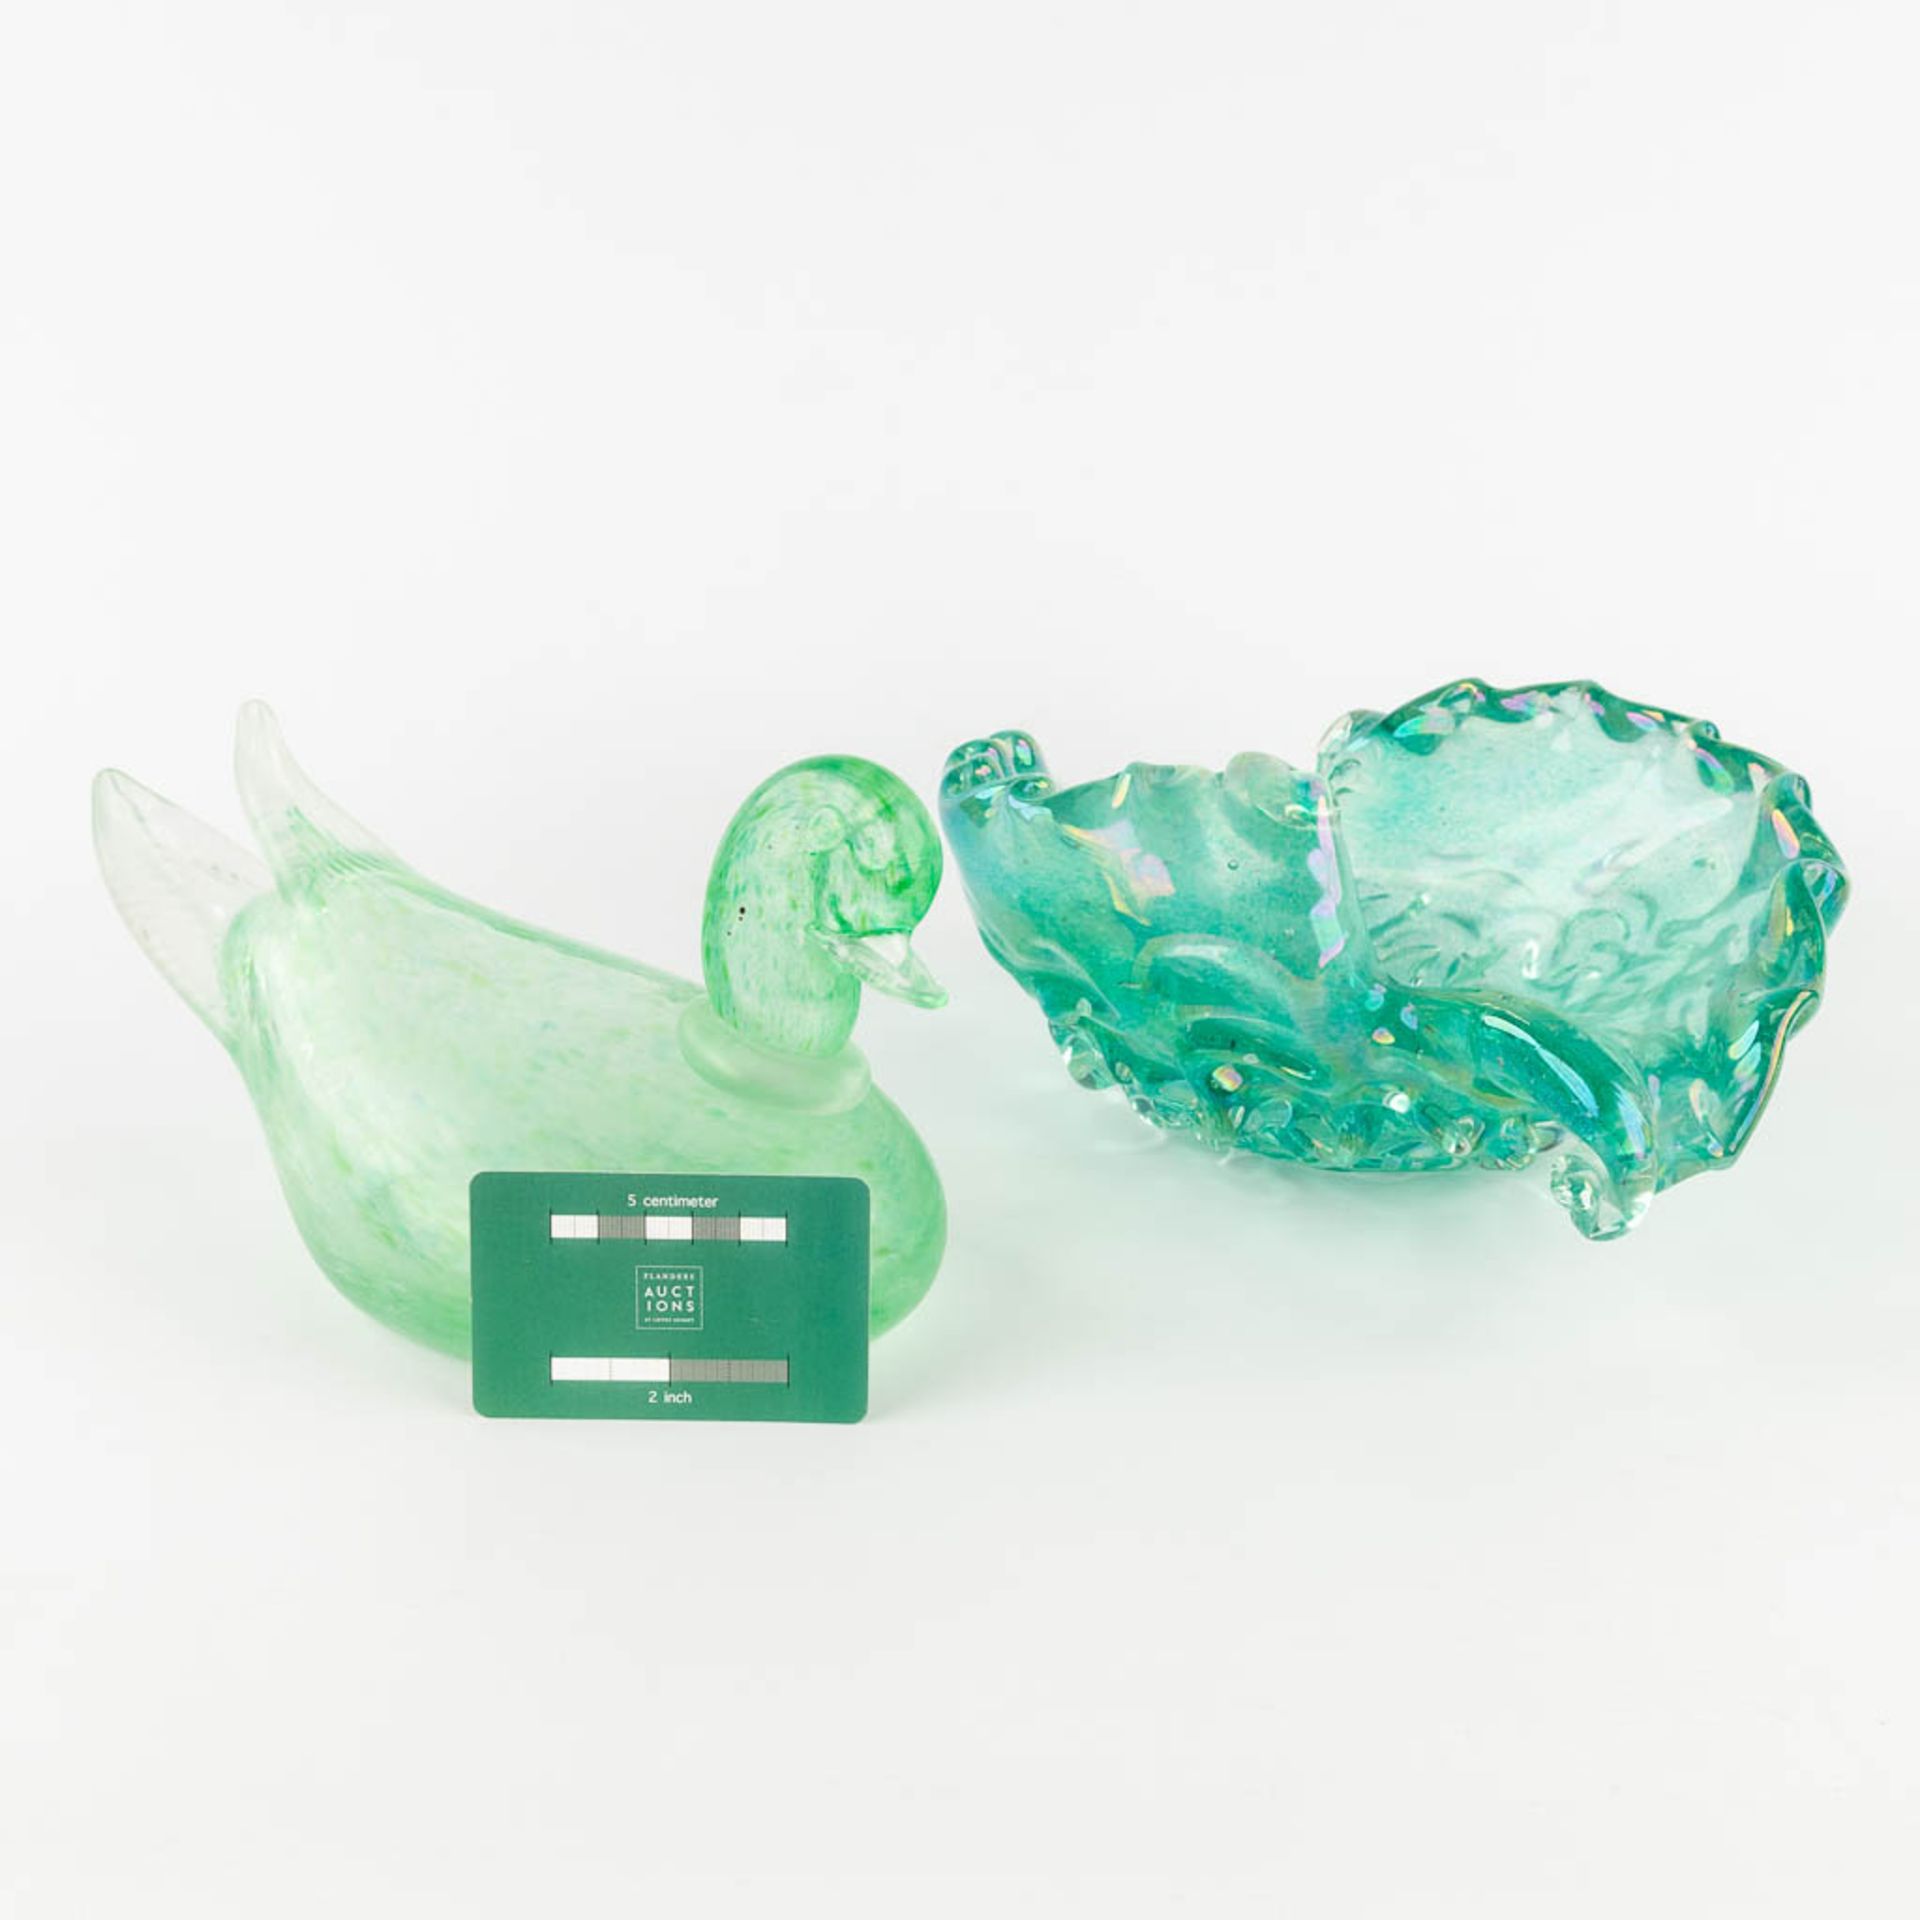 A vide-poche and duck, glass, Murano, Italy. (L:22 x W:29 x H:10,5 cm) - Image 2 of 16